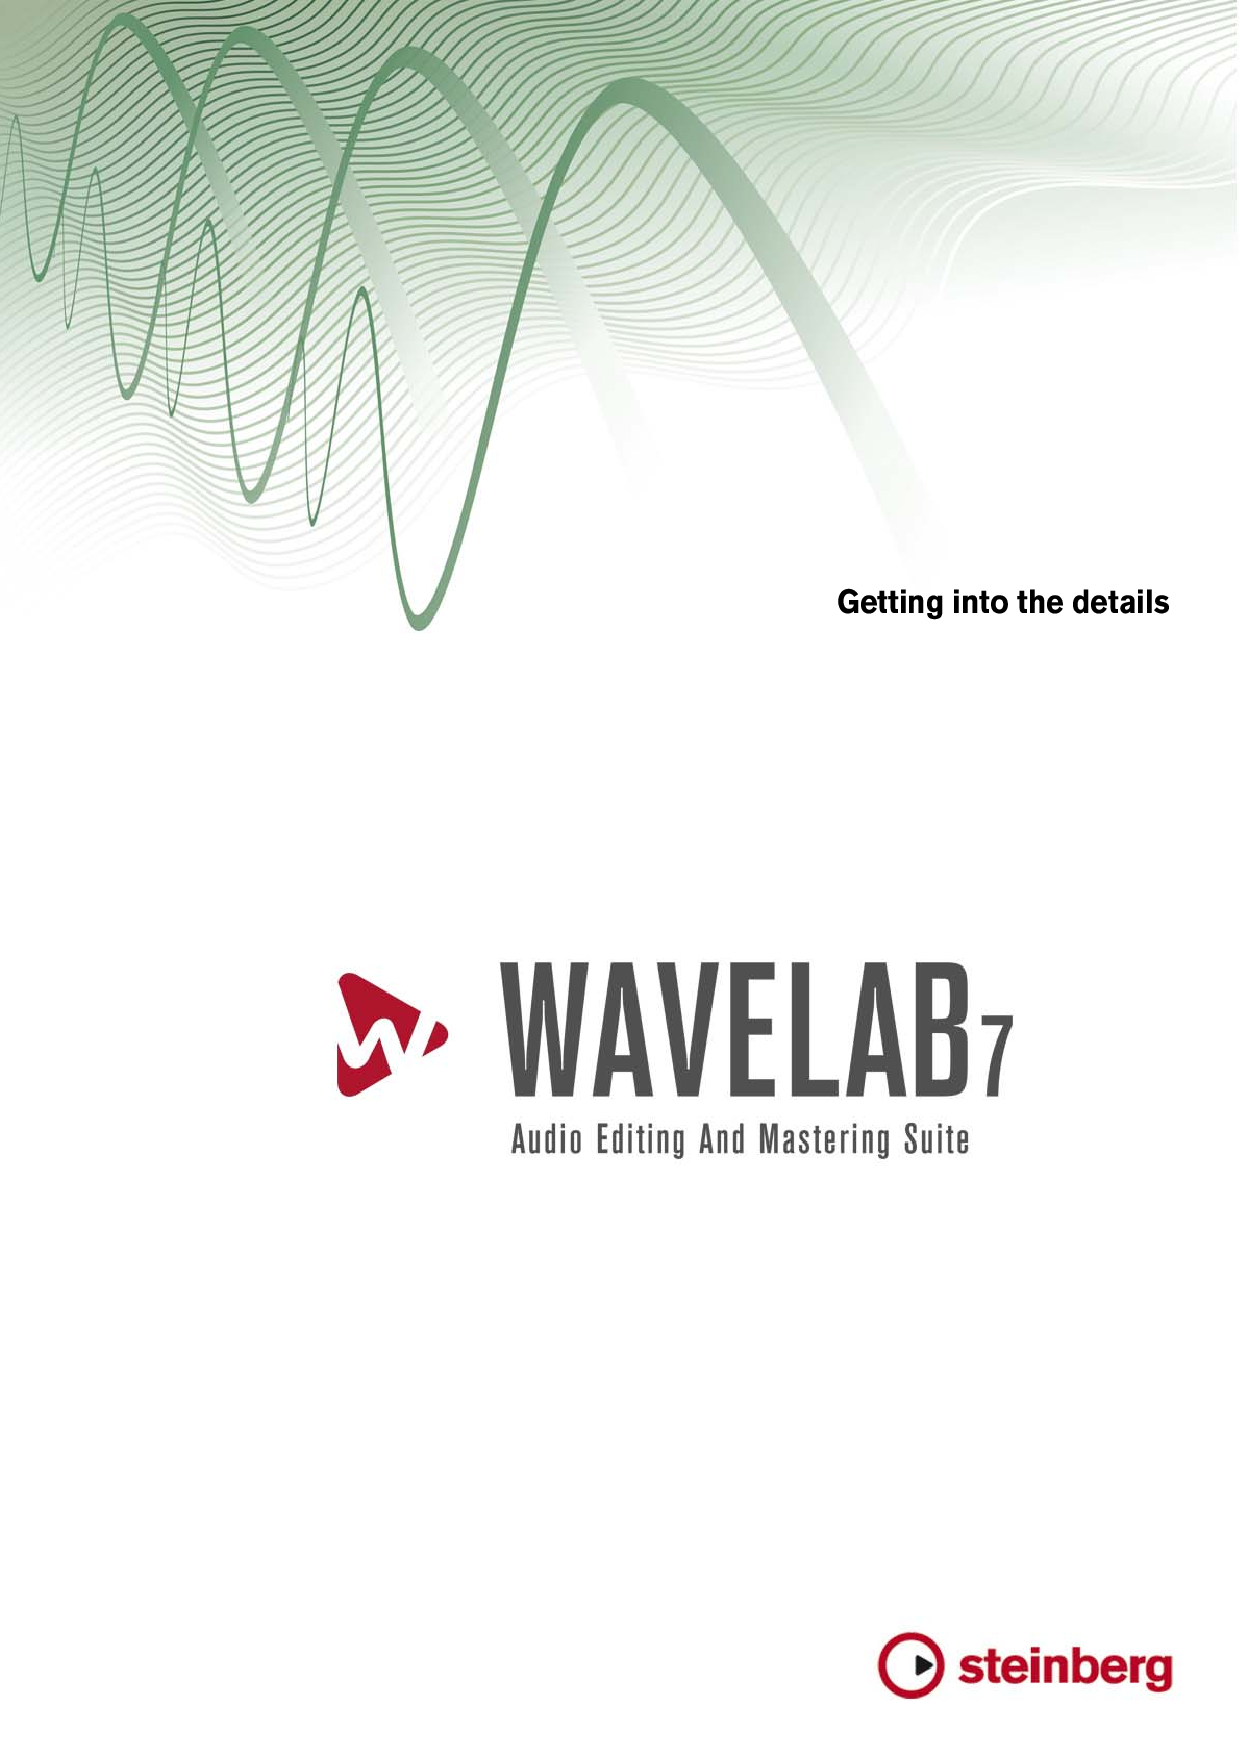 wavelab 7 edit master plugins?